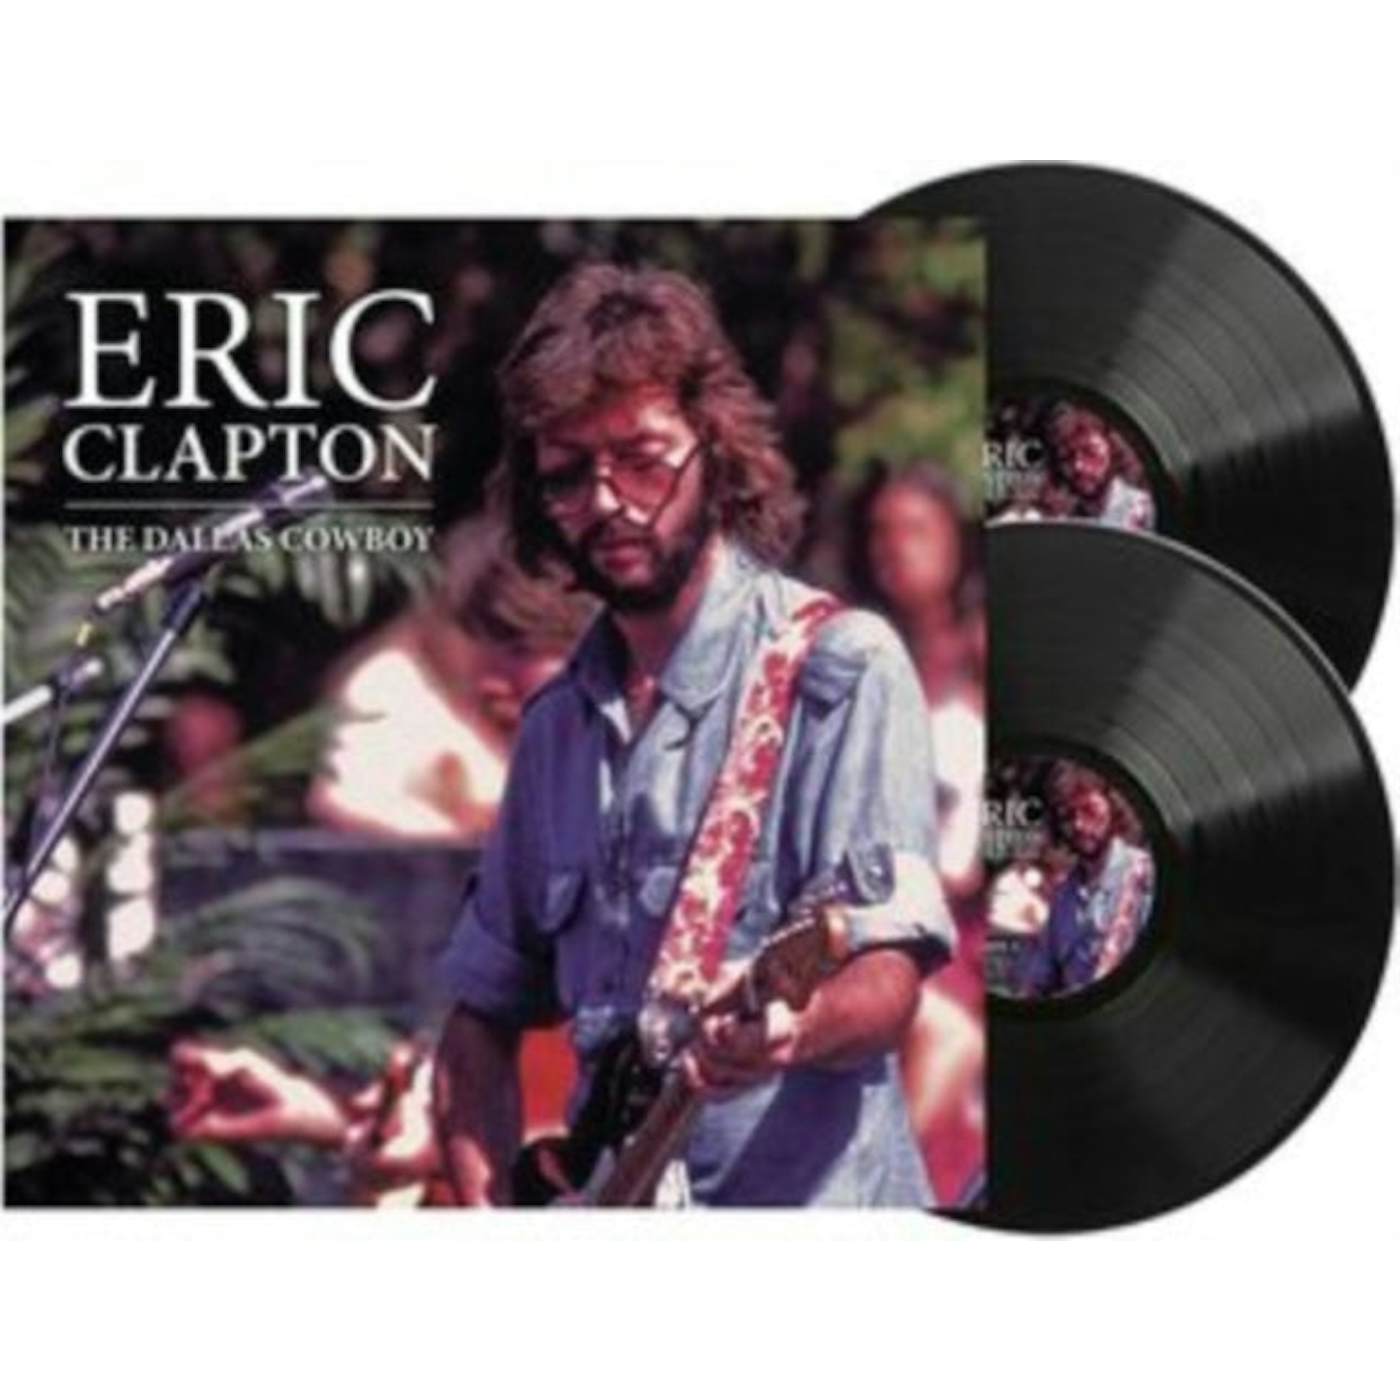 Eric Clapton LP Vinyl Record - The Dallas Cowboy